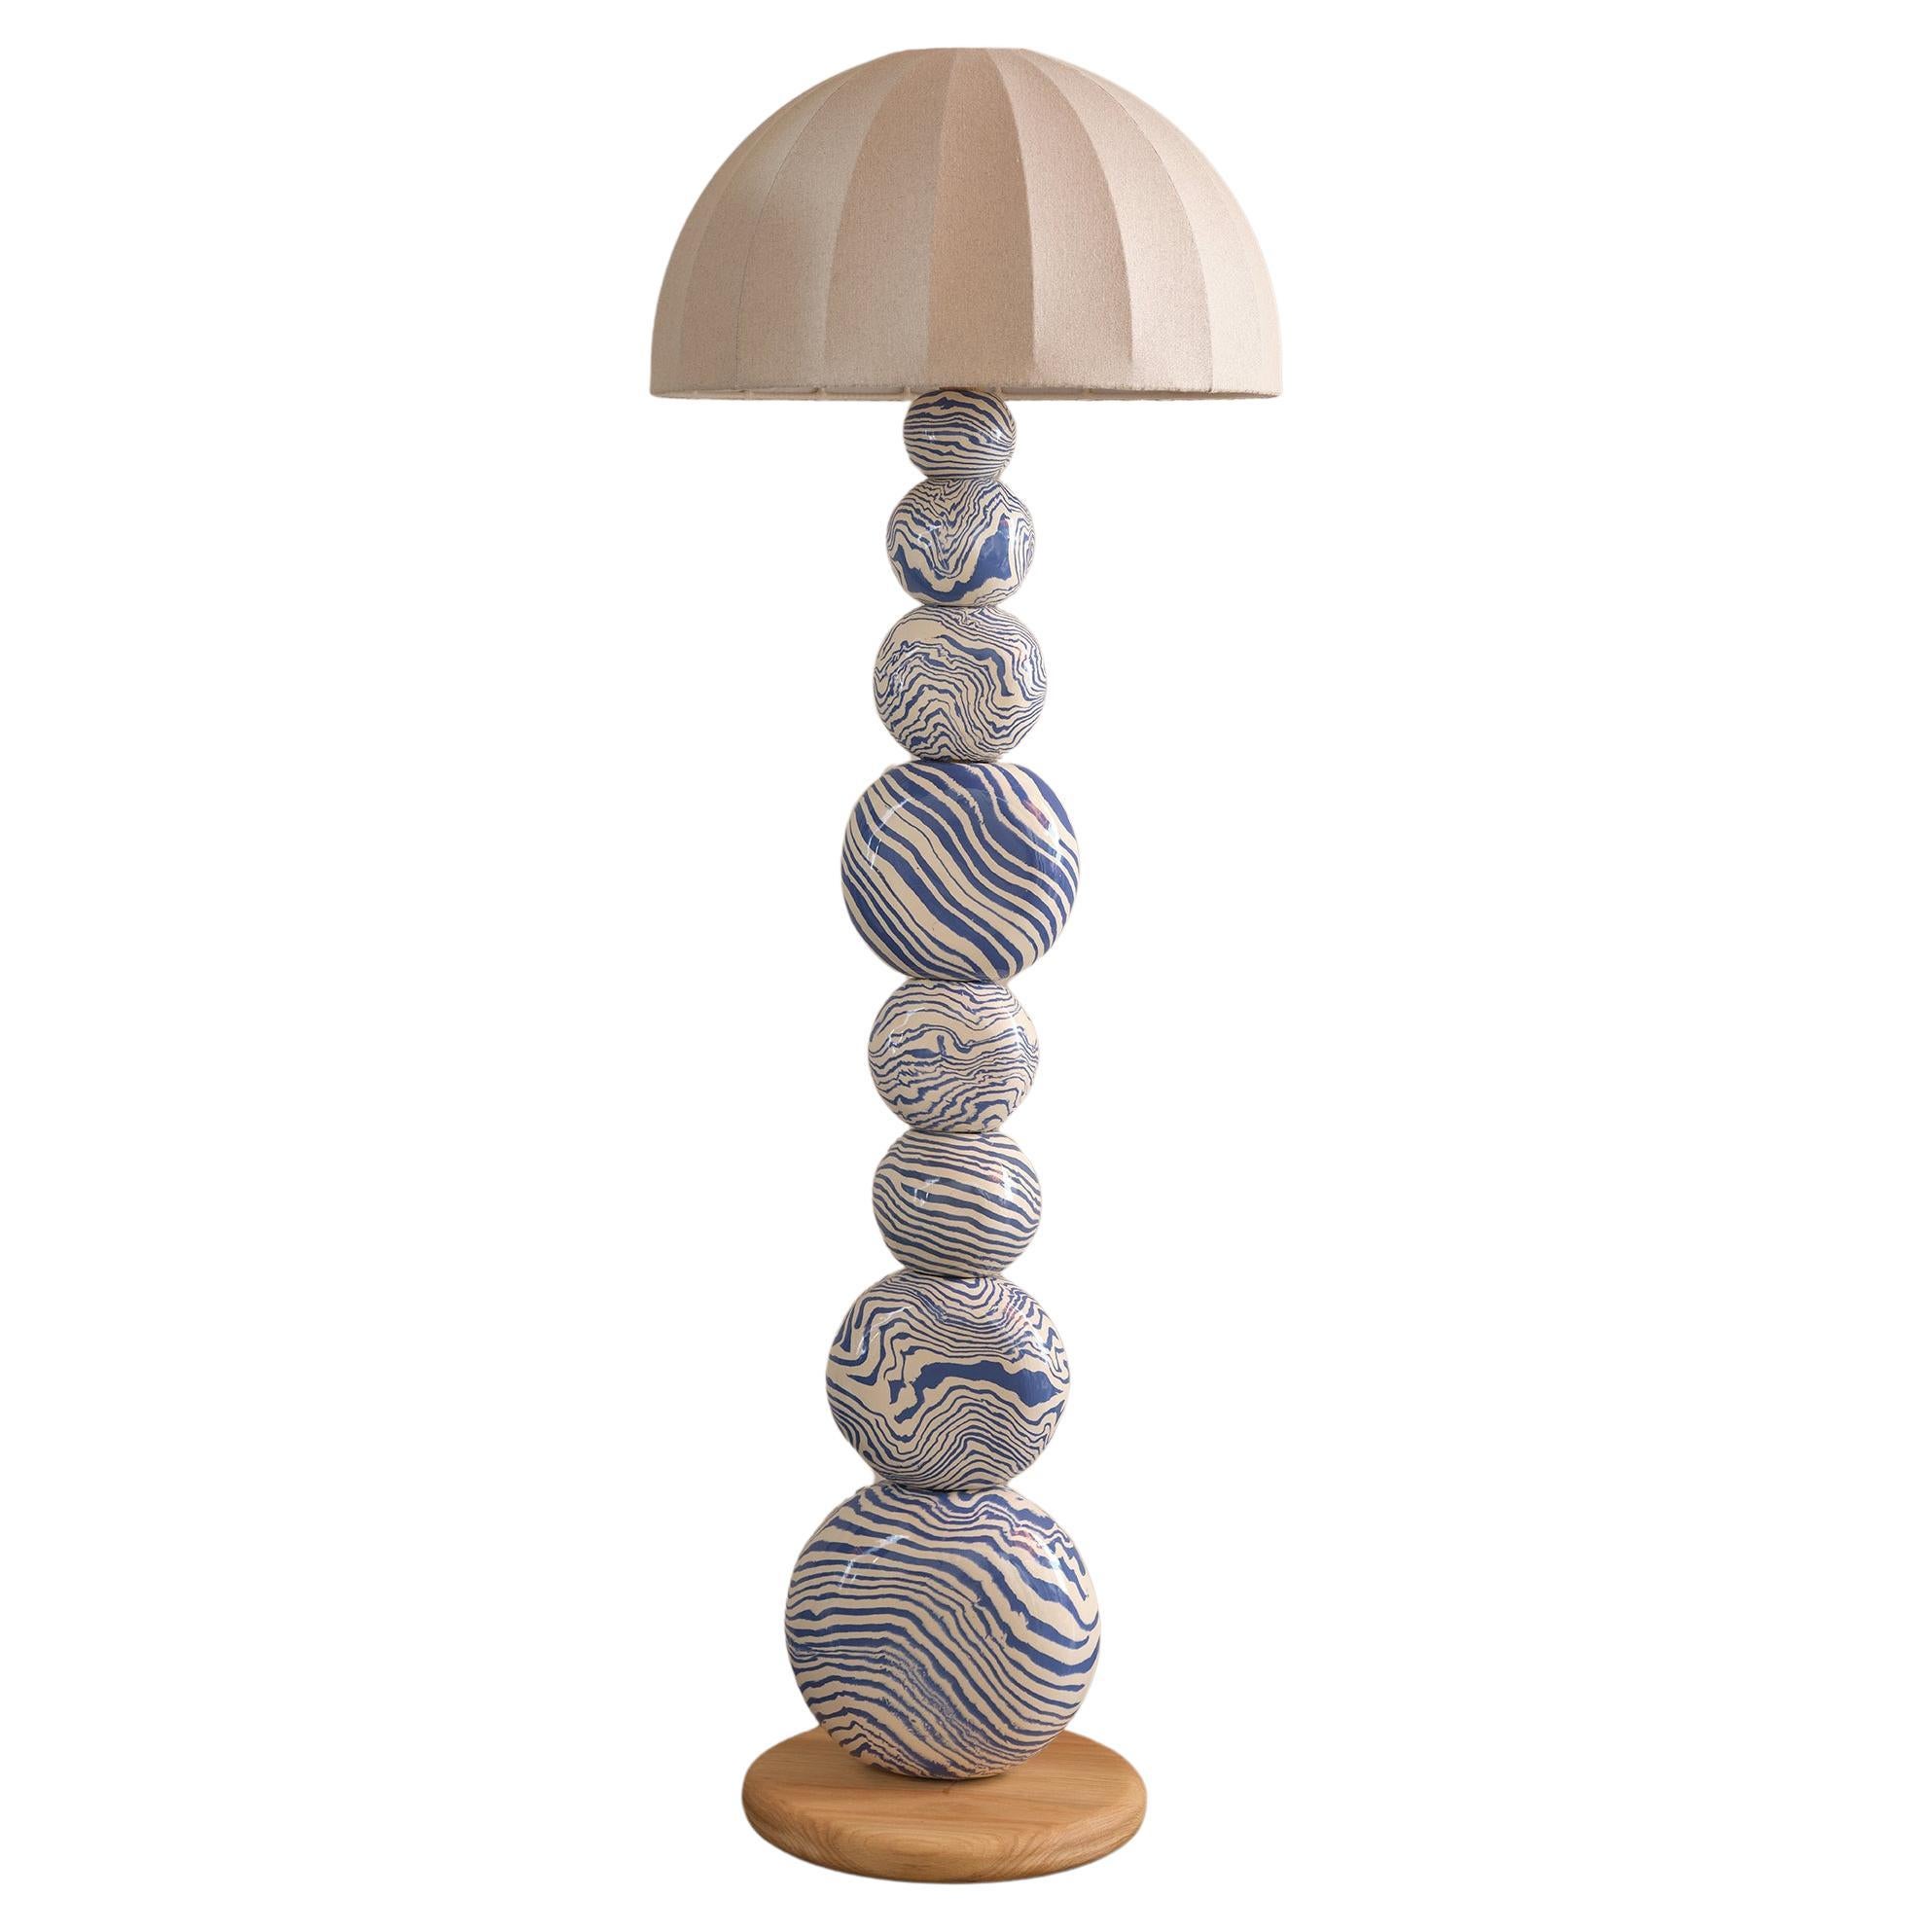 Henry Holland Studio, handgefertigte blau-weiße Keramikkugel-Stehlampe